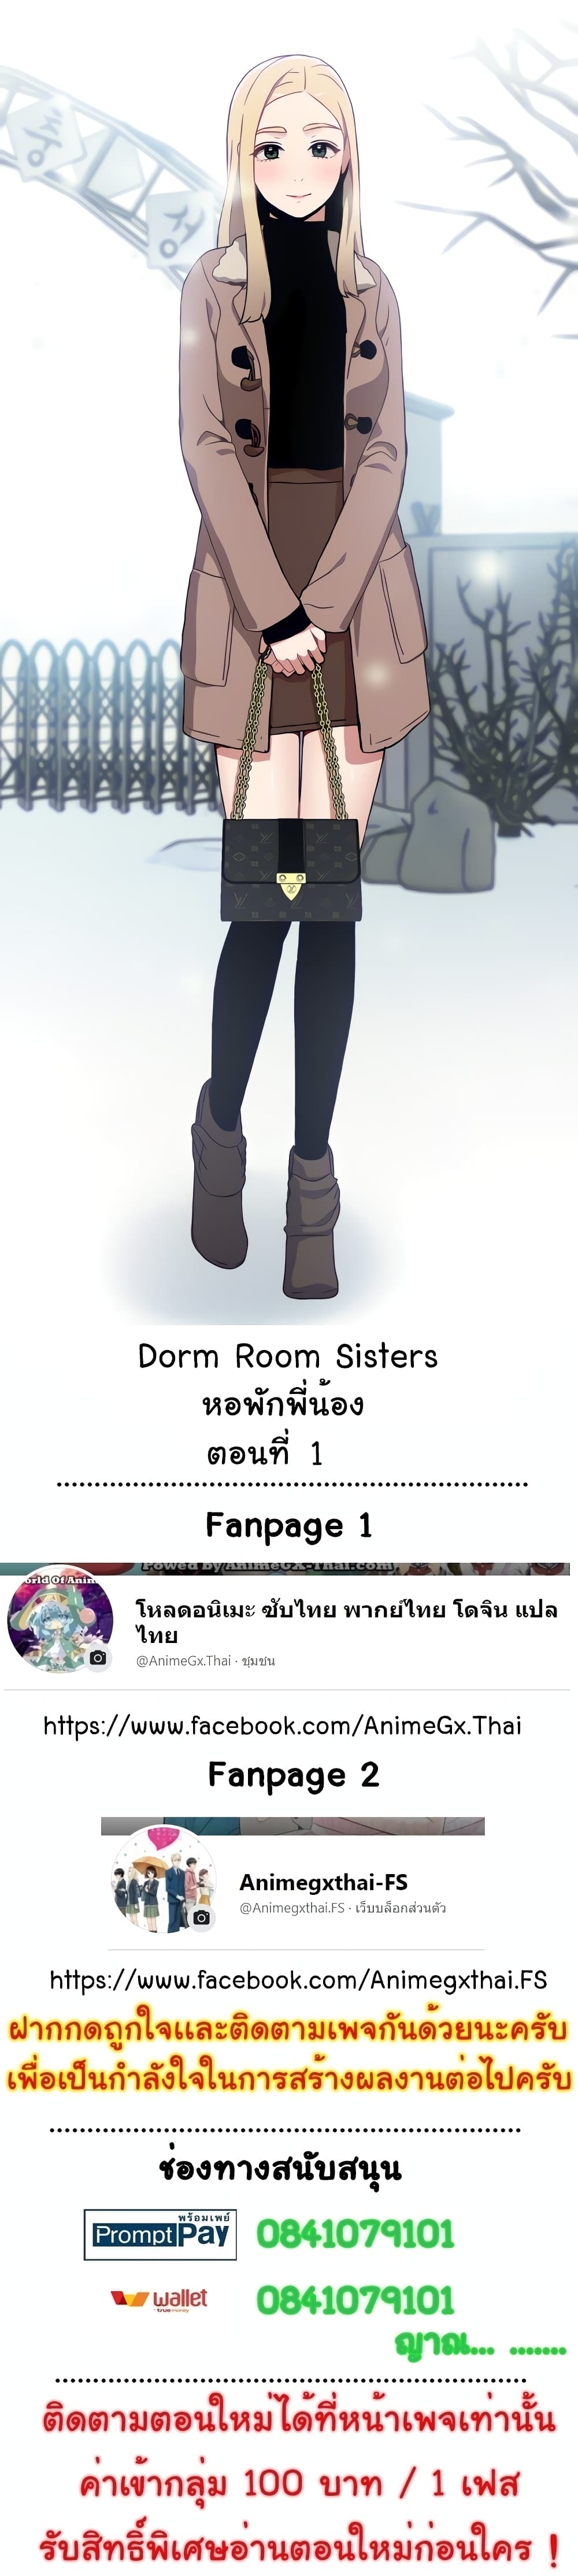 Dorm Room Sisters 1-1